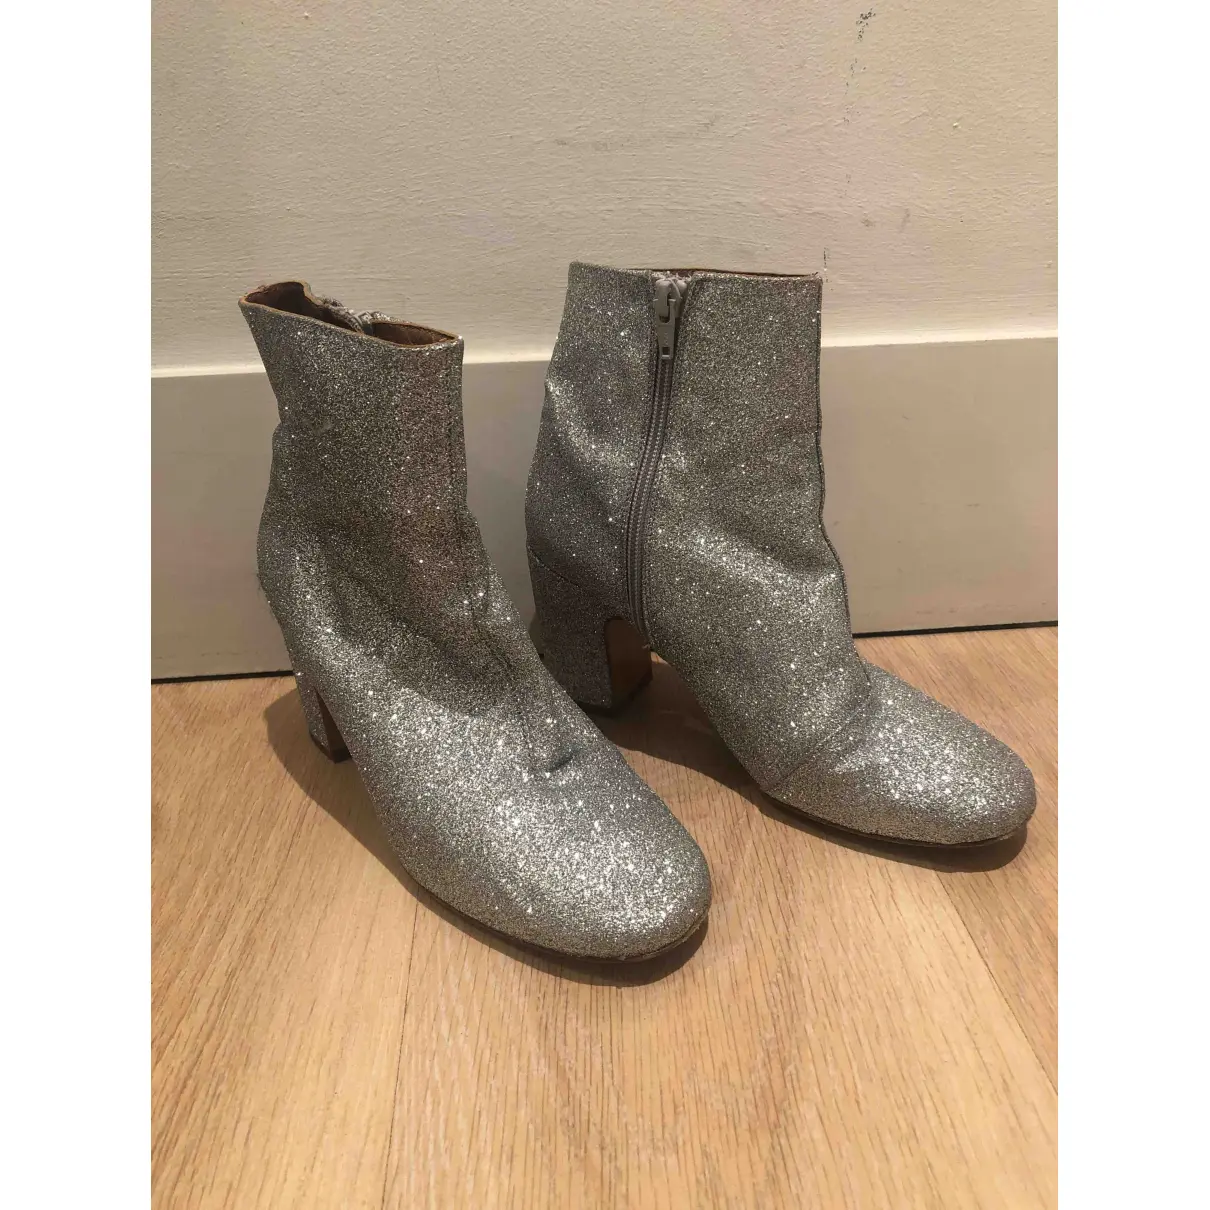 Buy Bimba y Lola Glitter boots online